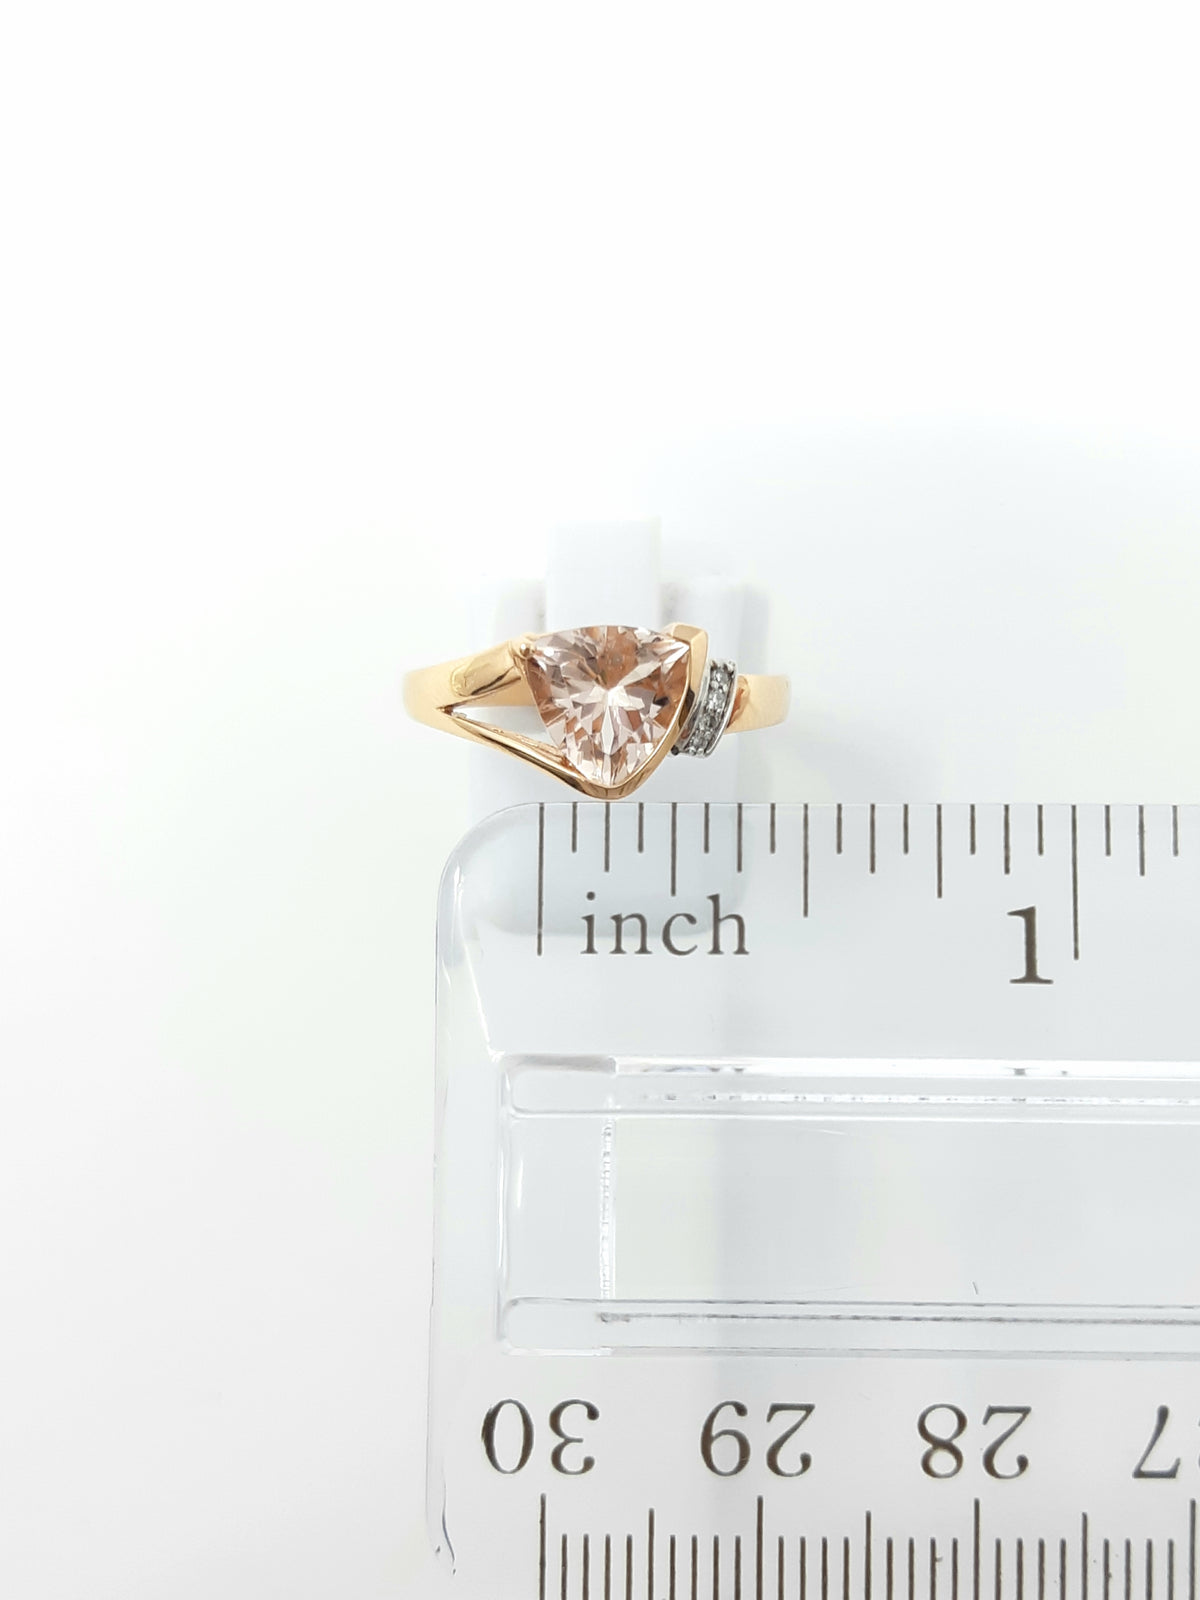 10K Rose Gold Gemstone and Diamond Ring- Size 6.5